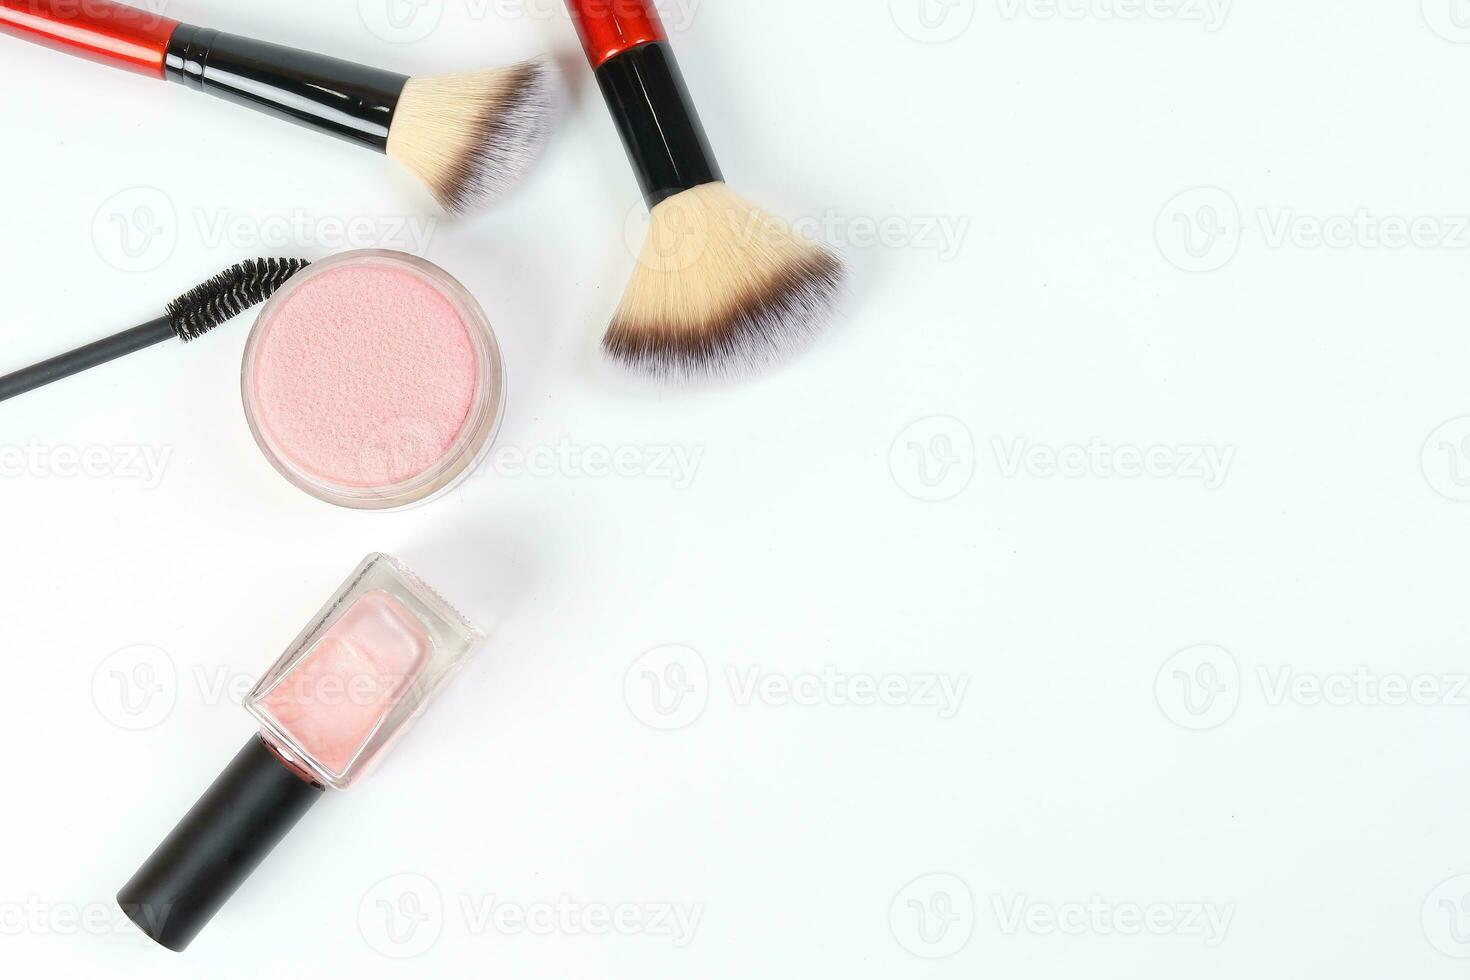 belleza maquillaje cara pelo accesorios cosmetólogo artista en blanco antecedentes Copiar espacio frontera marco parte superior ver foto